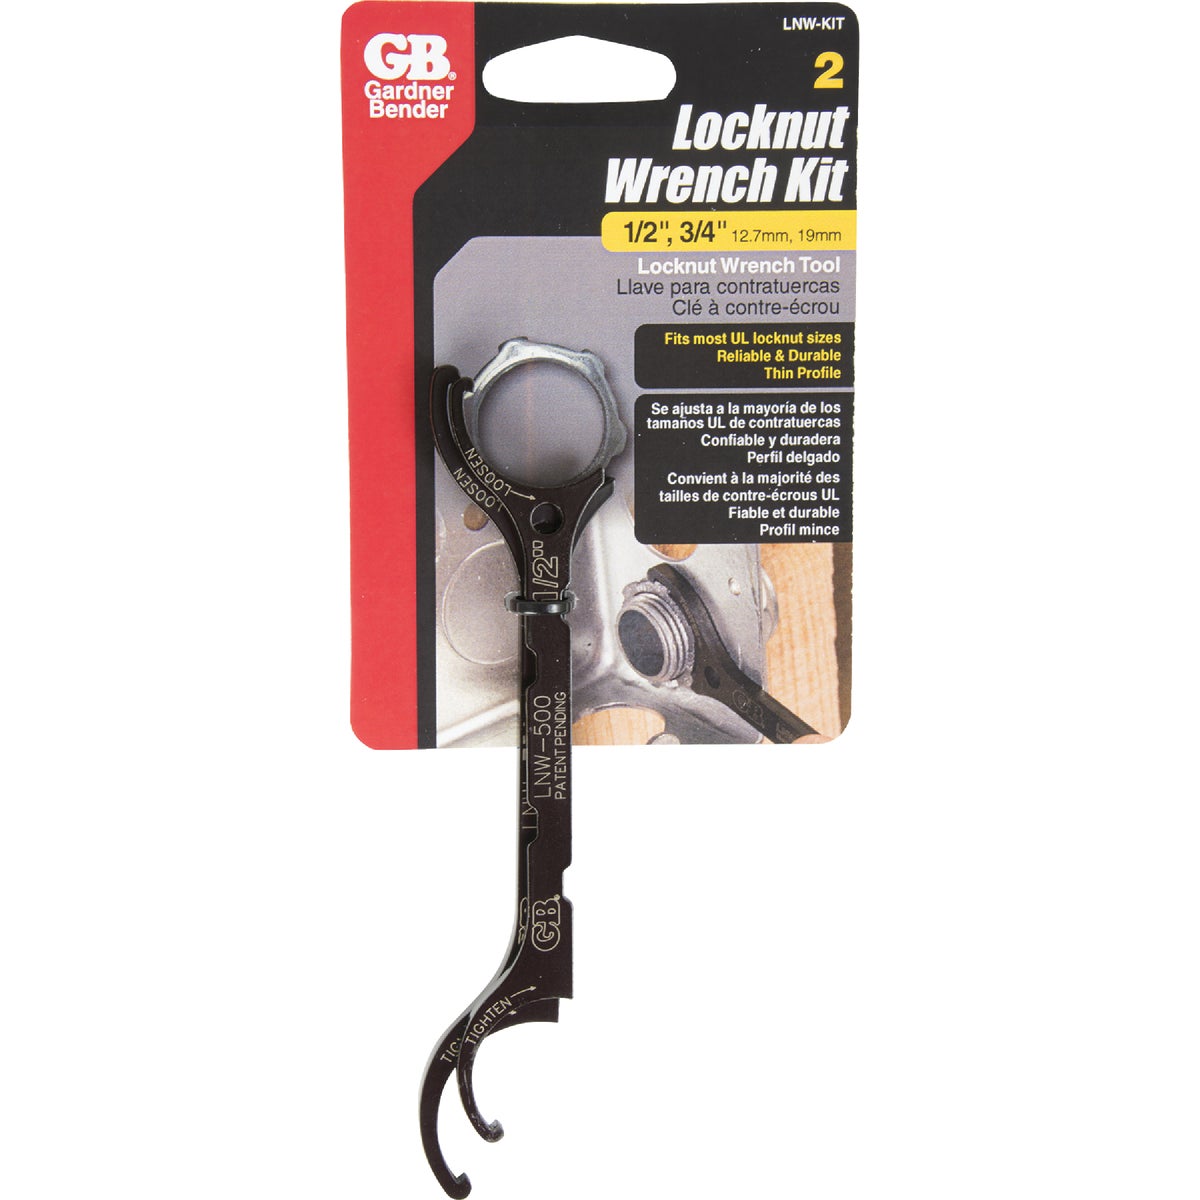 Locknut Wrench Kit